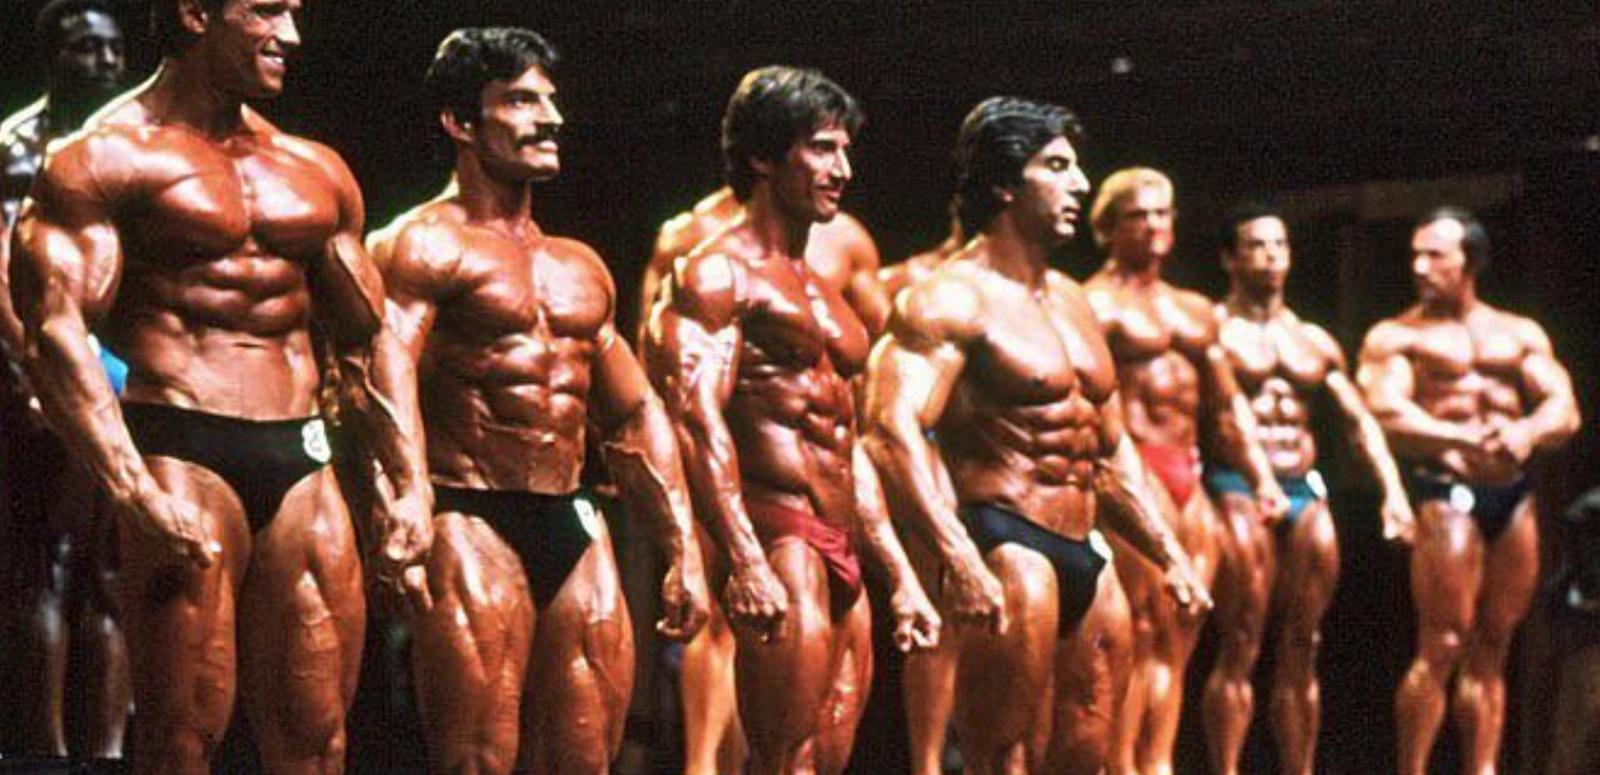 A row of bodybuilders